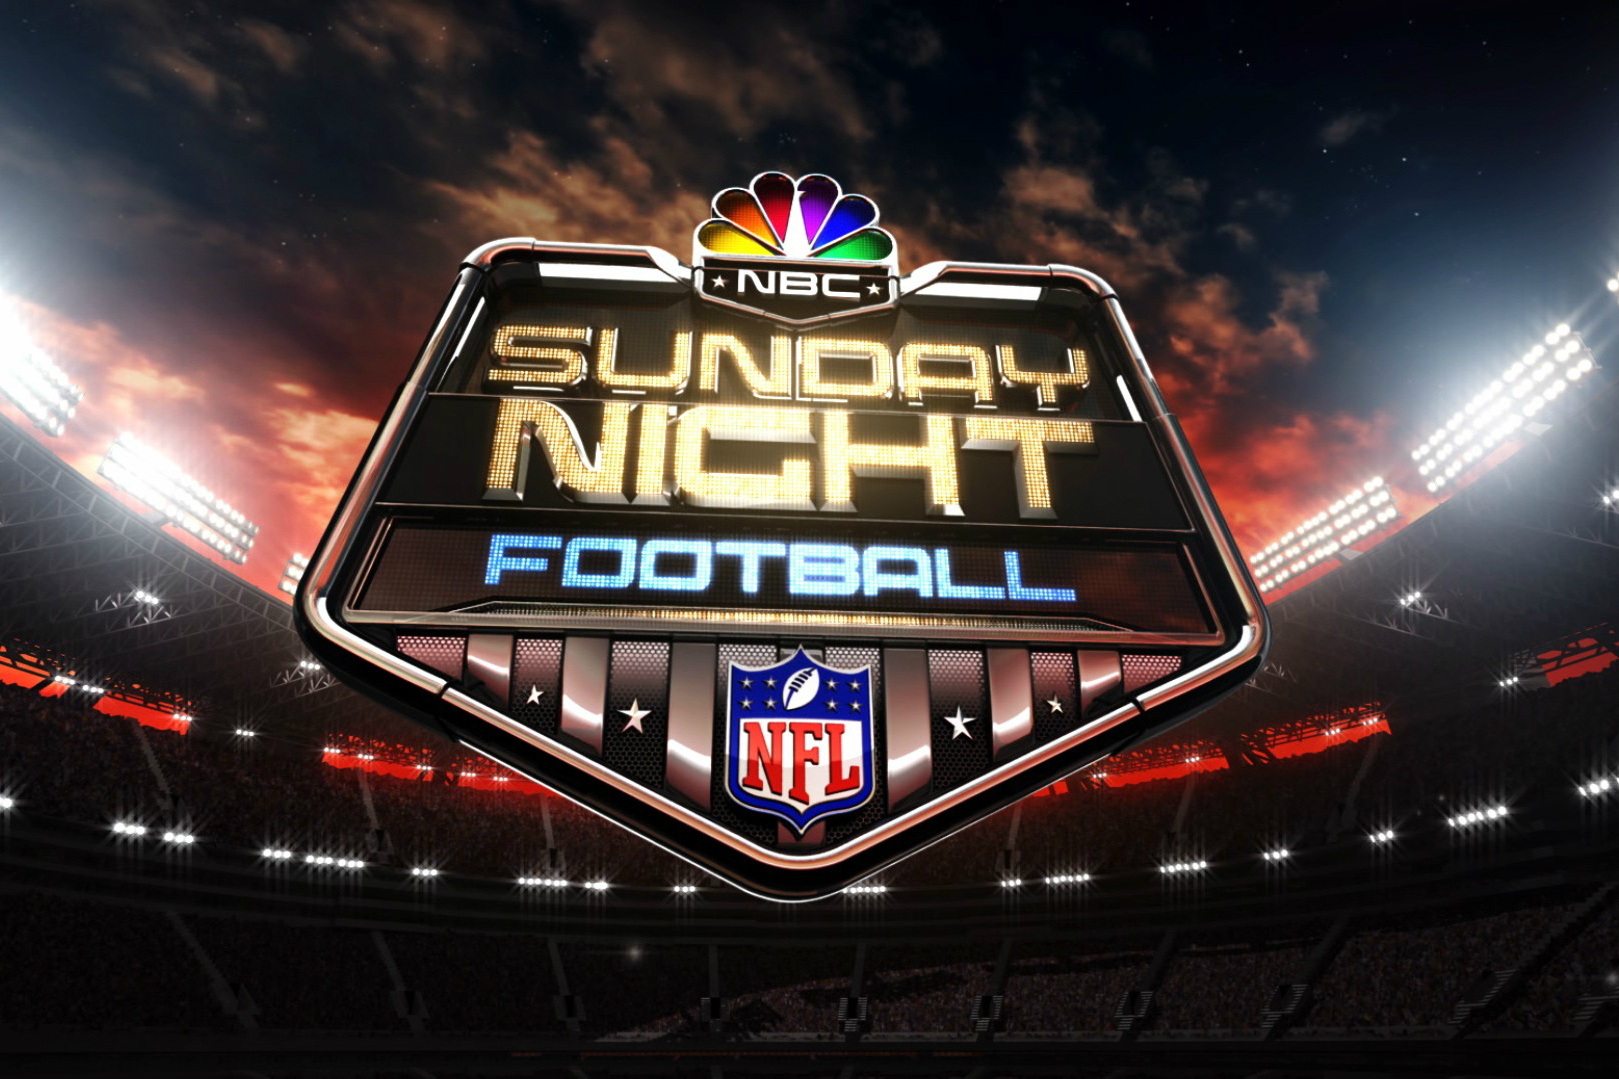 How to watch NBC's Sunday Night Football